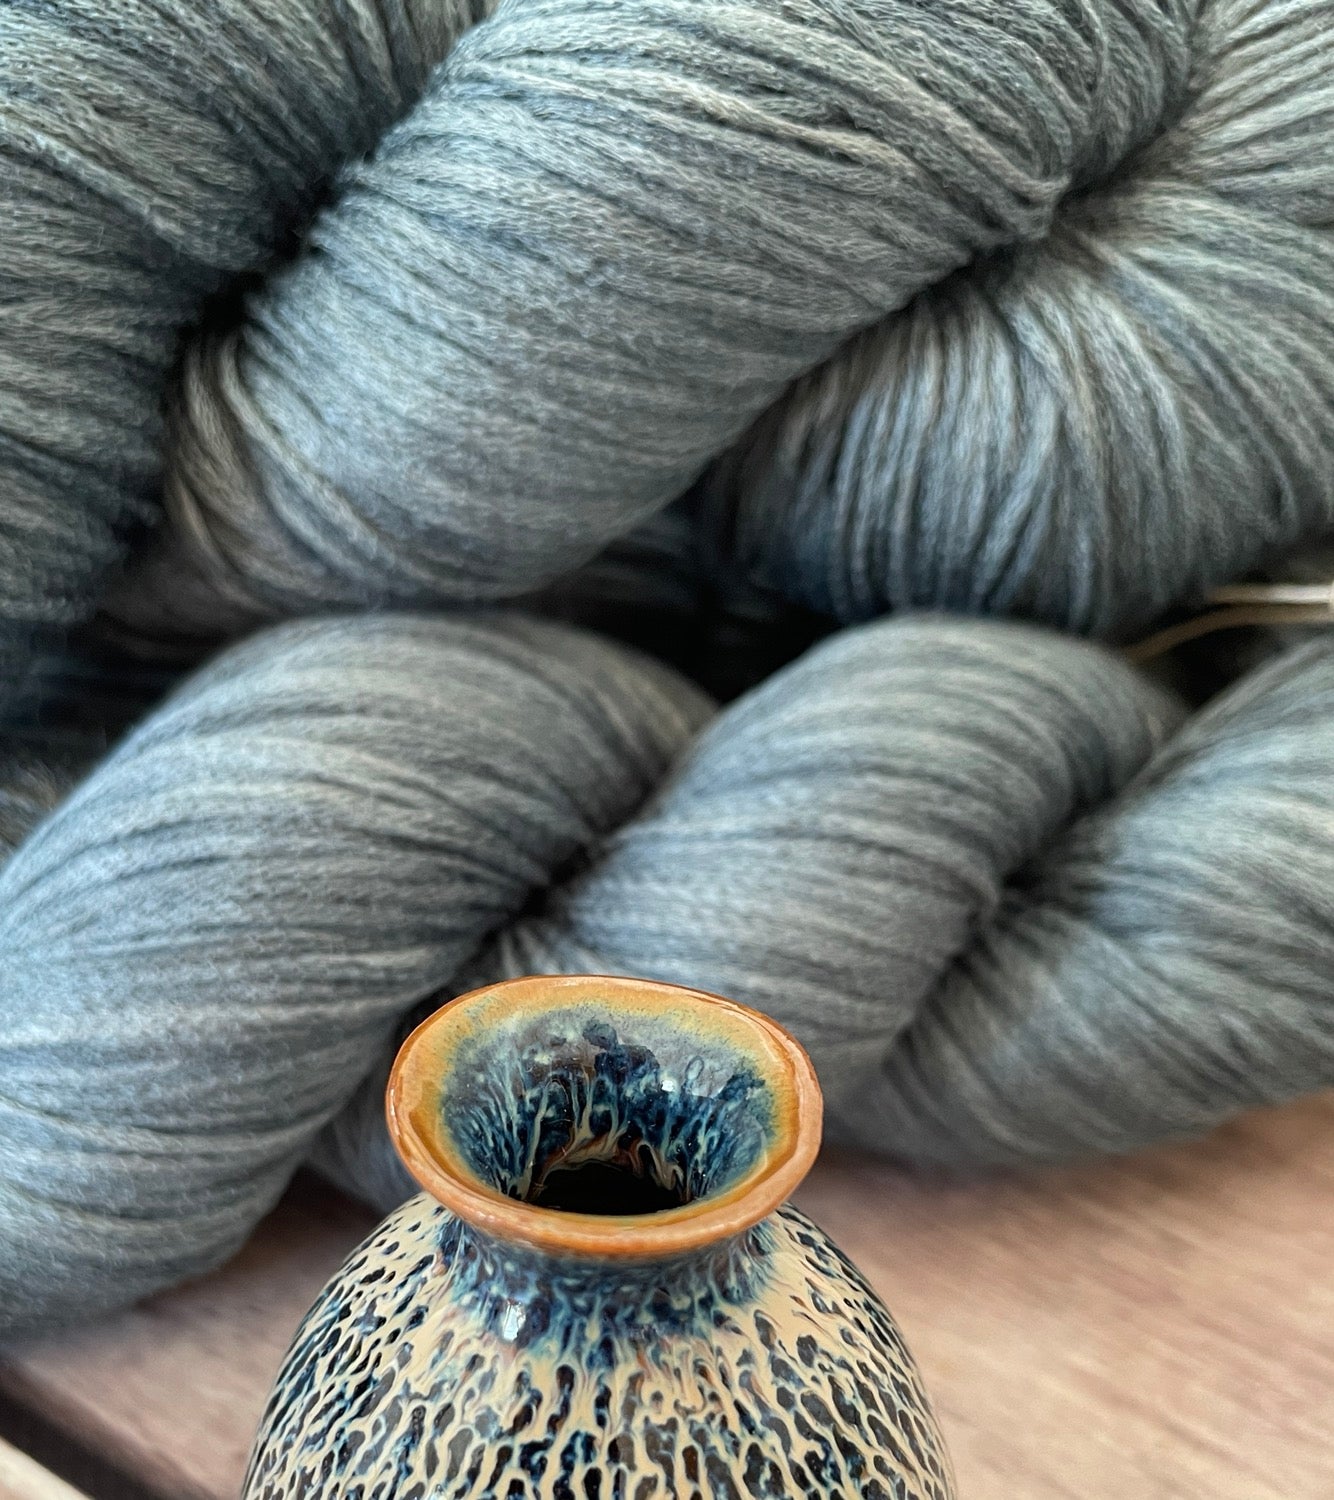 Ashworth ooak on Yecha - Tussah silk chainette yarn - 4 ply - OB